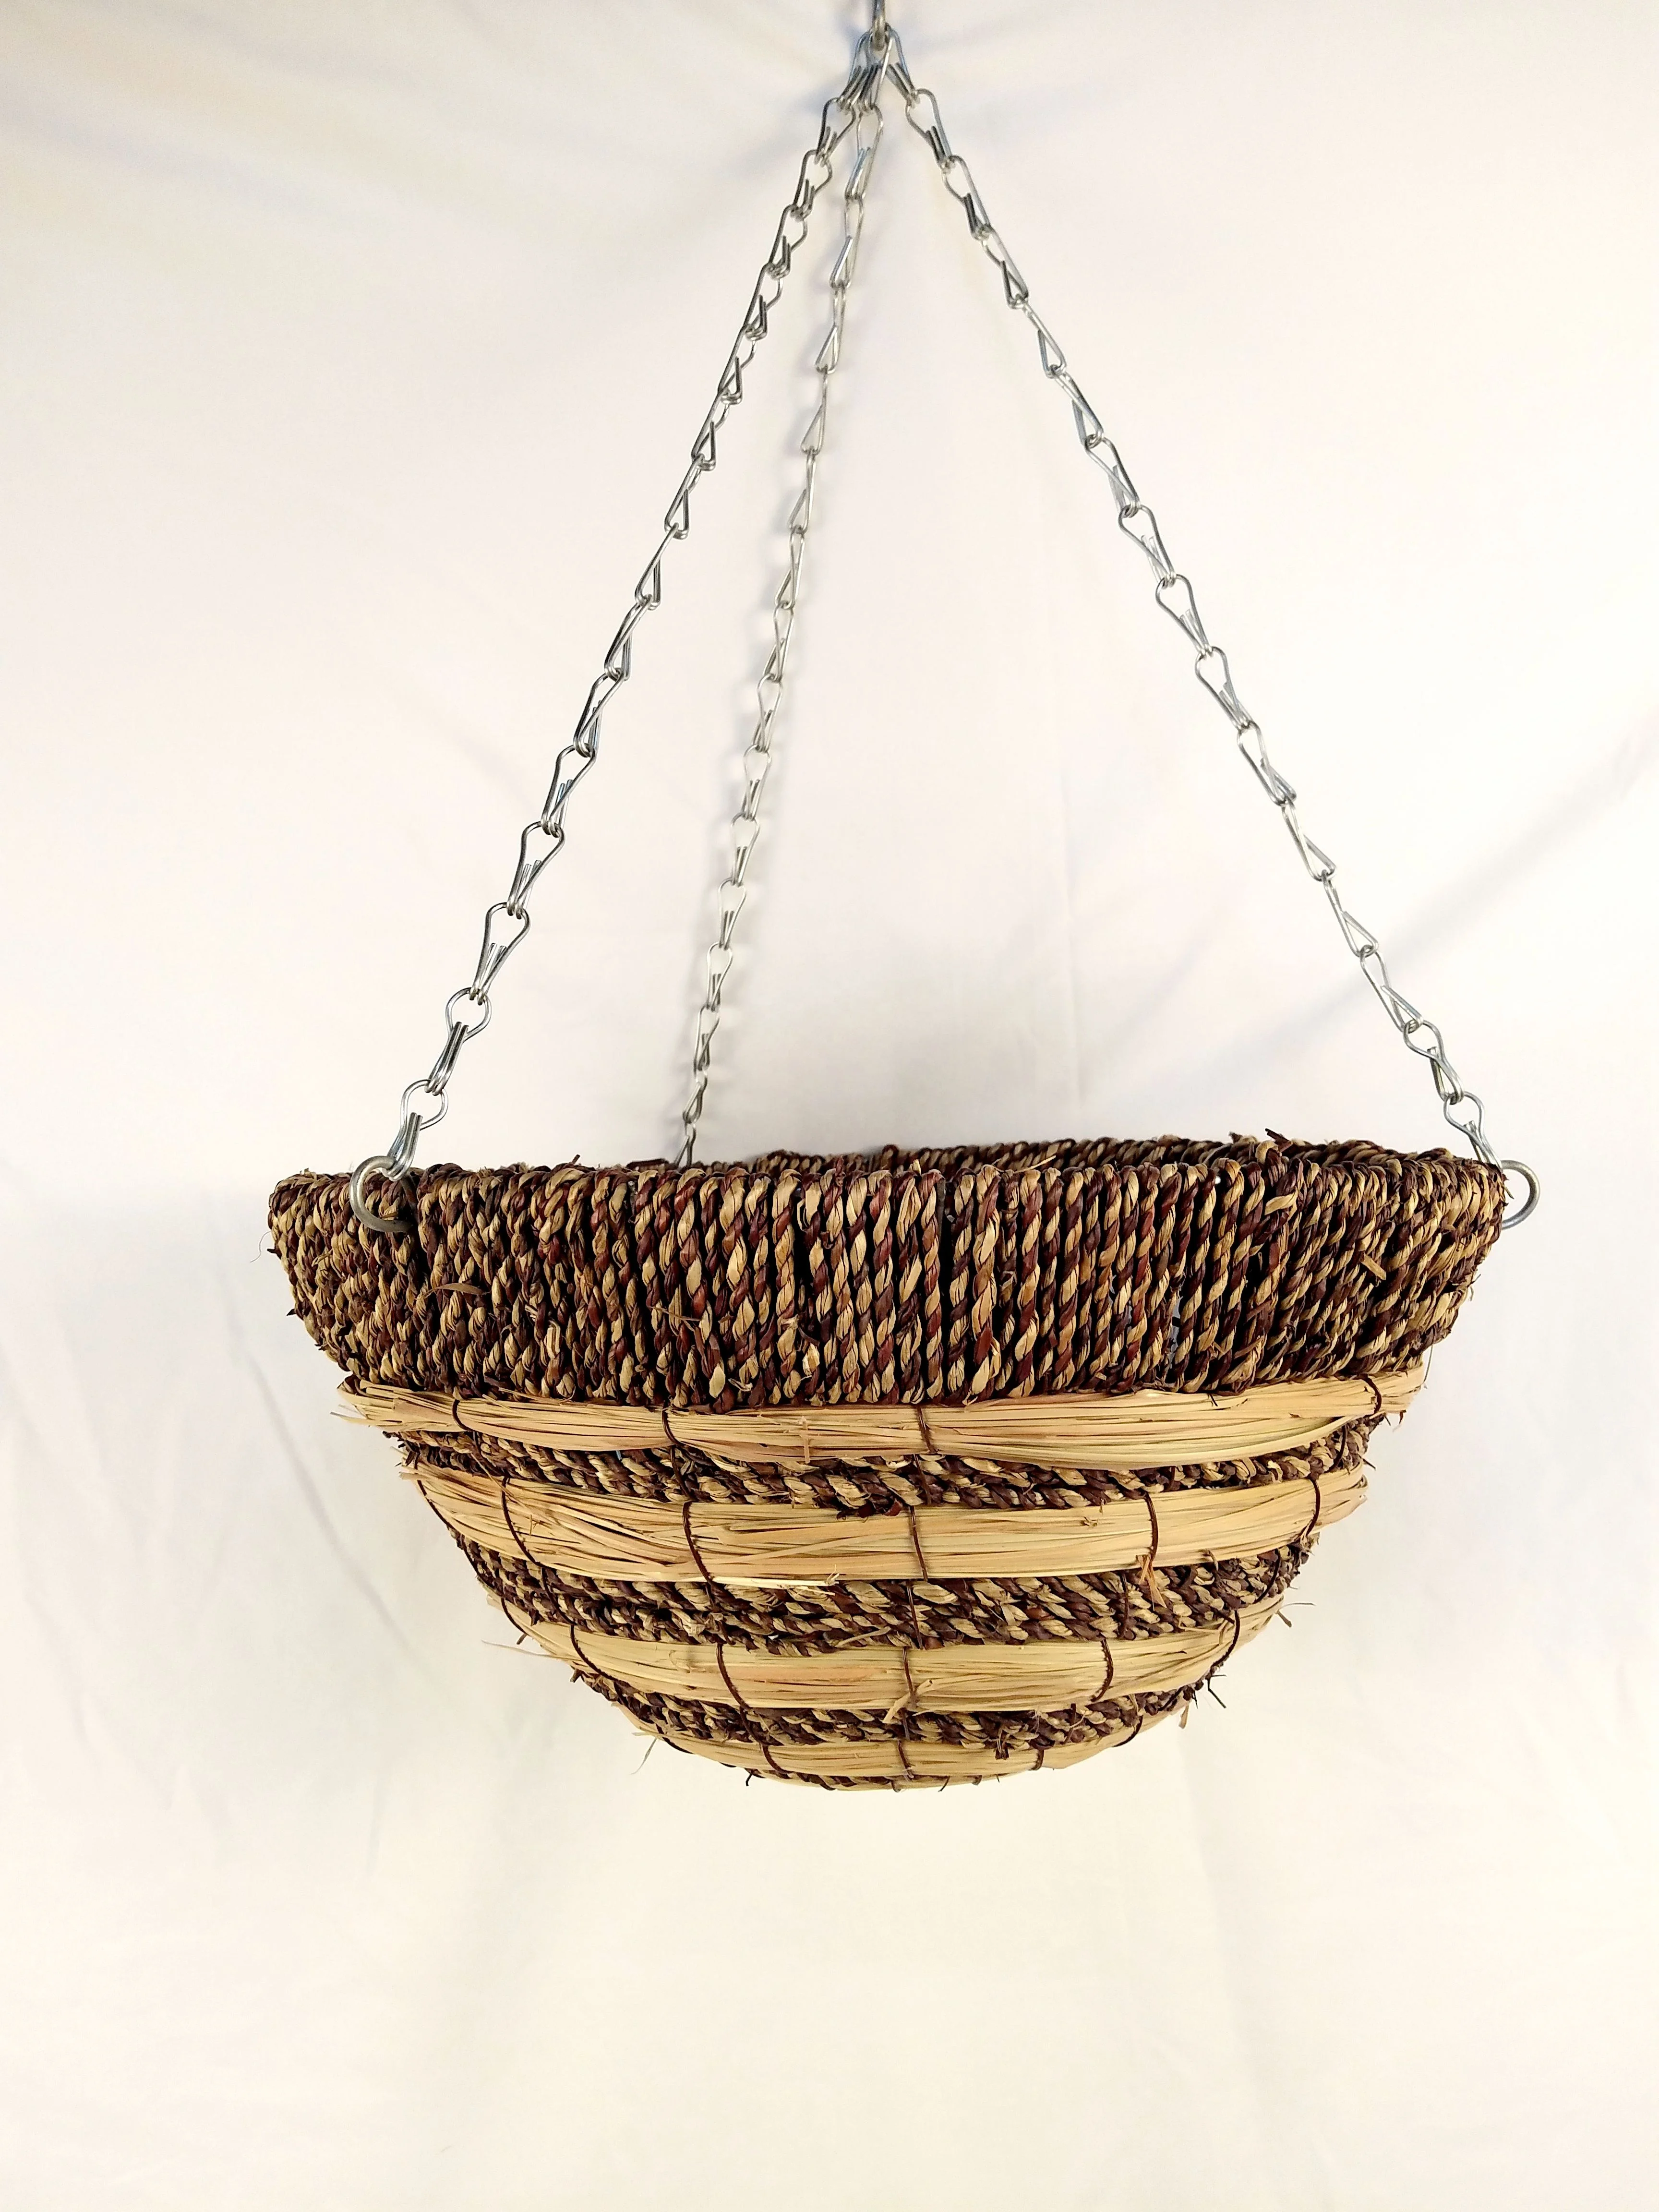 
Hot Sale Wholesale Handmade Woven Seagrass Hanging Basket Flower Pot for Garden Planter 